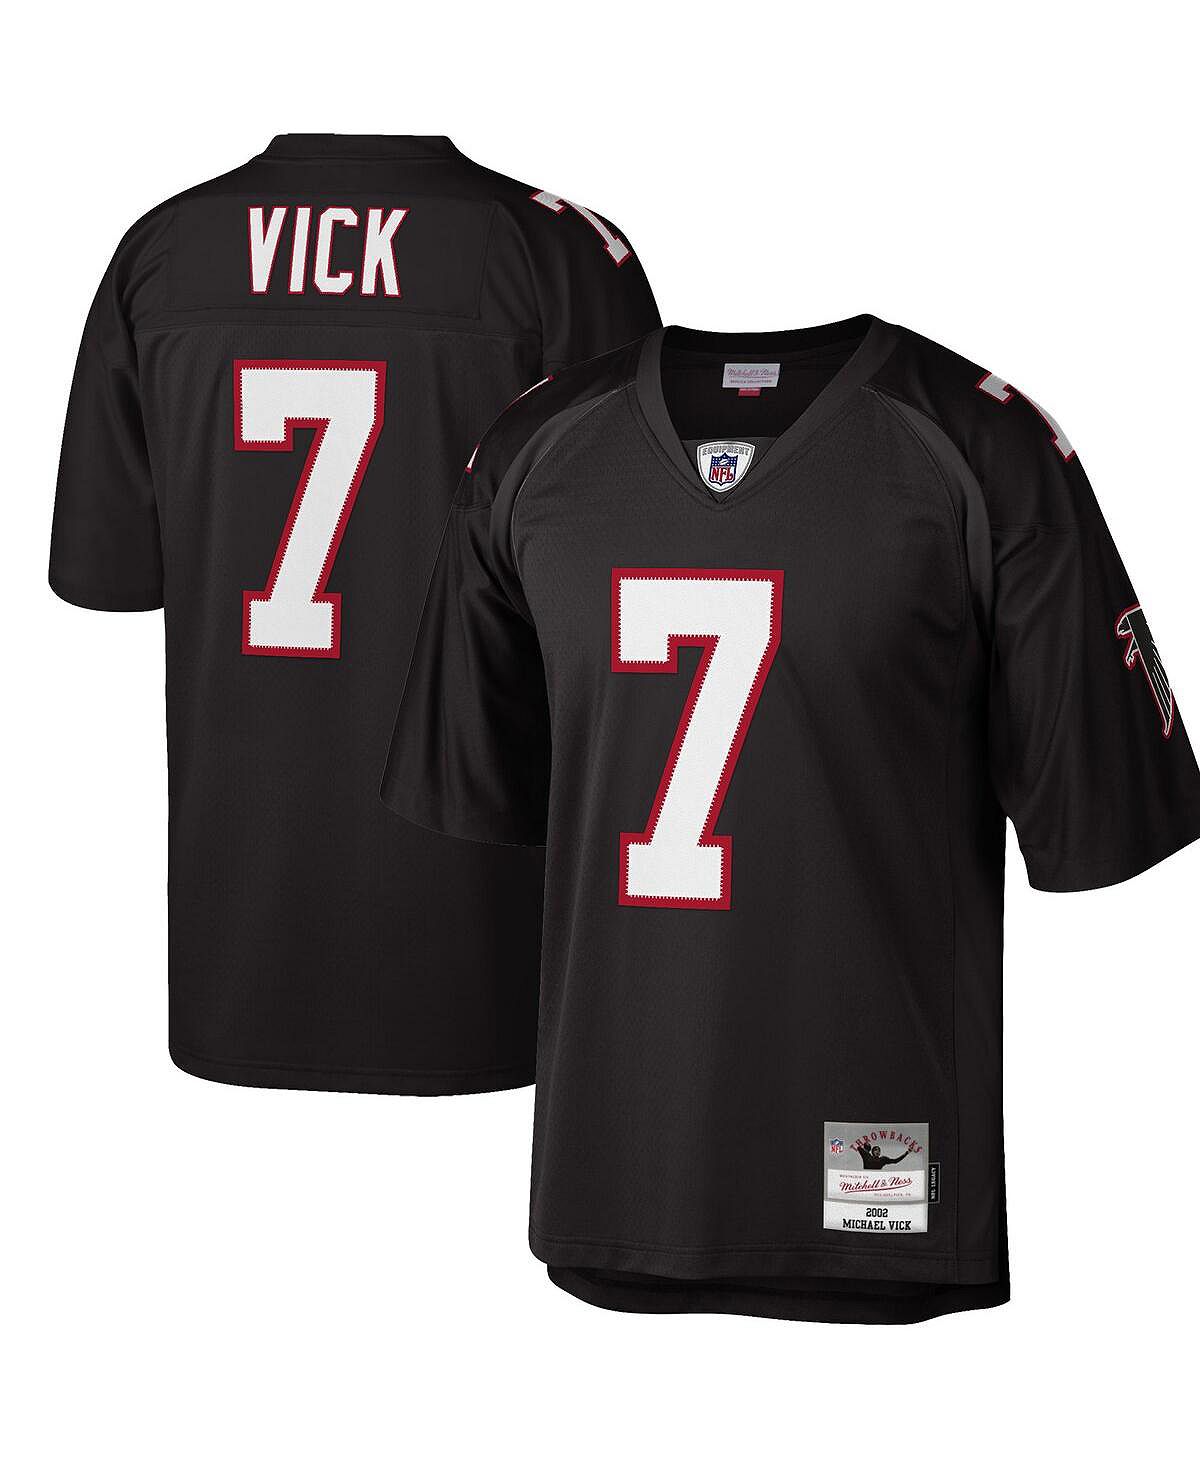 Мужская футболка michael vick black atlanta falcons big and tall 2002, копия игрока на пенсии, джерси Mitchell & Ness, черный